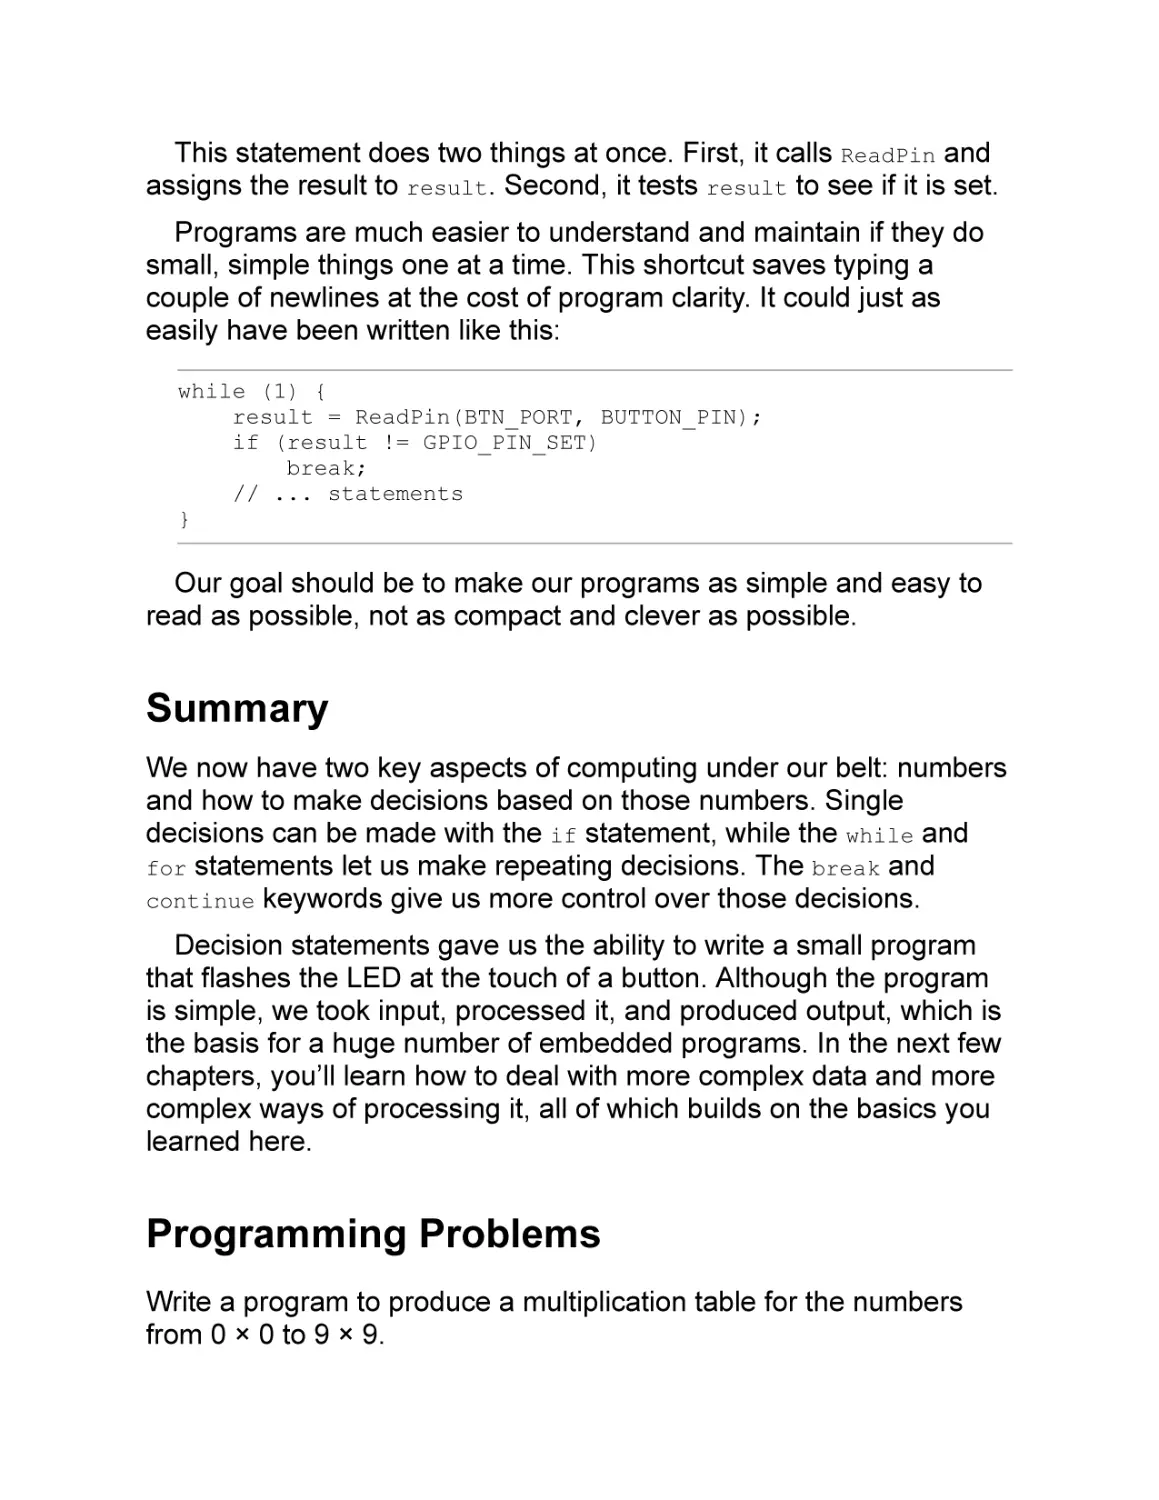 Summary
Programming Problems